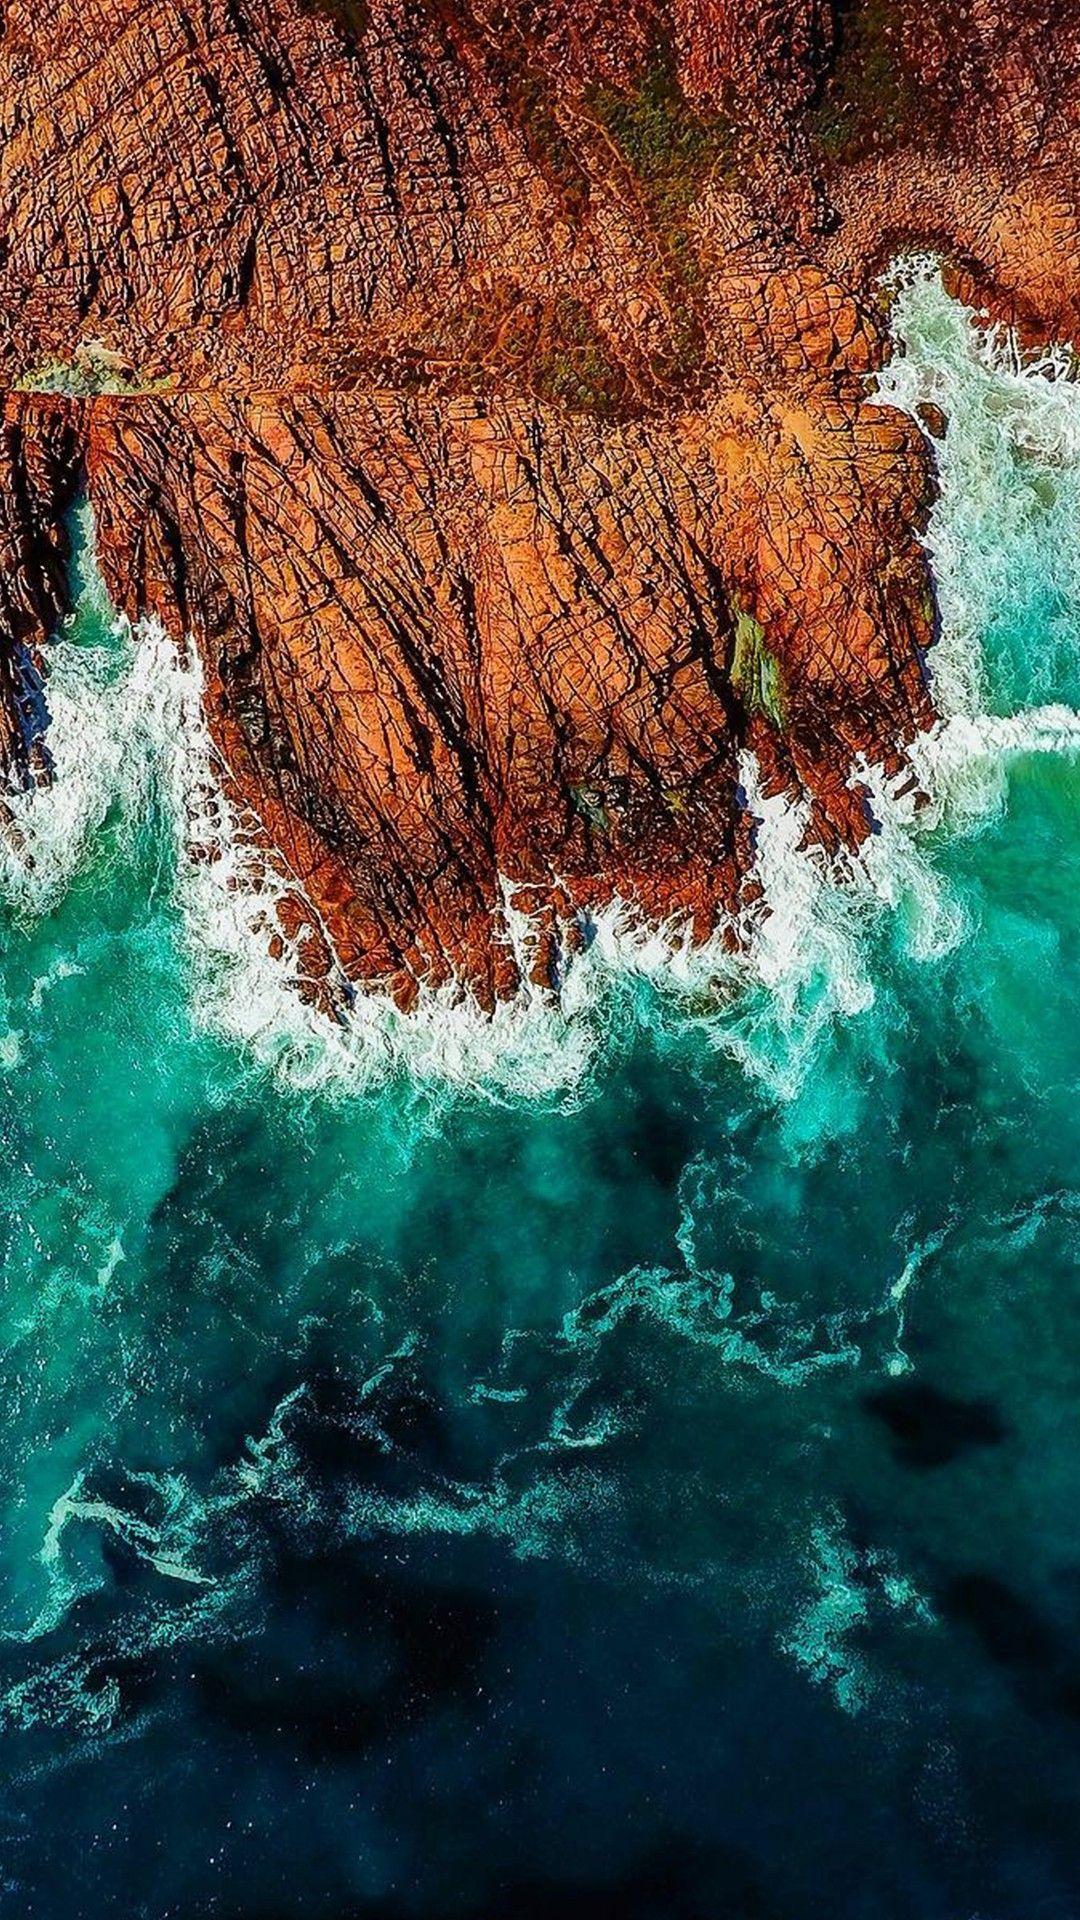 iPhone wallpaper. Ocean waves. Graphic Design & Such